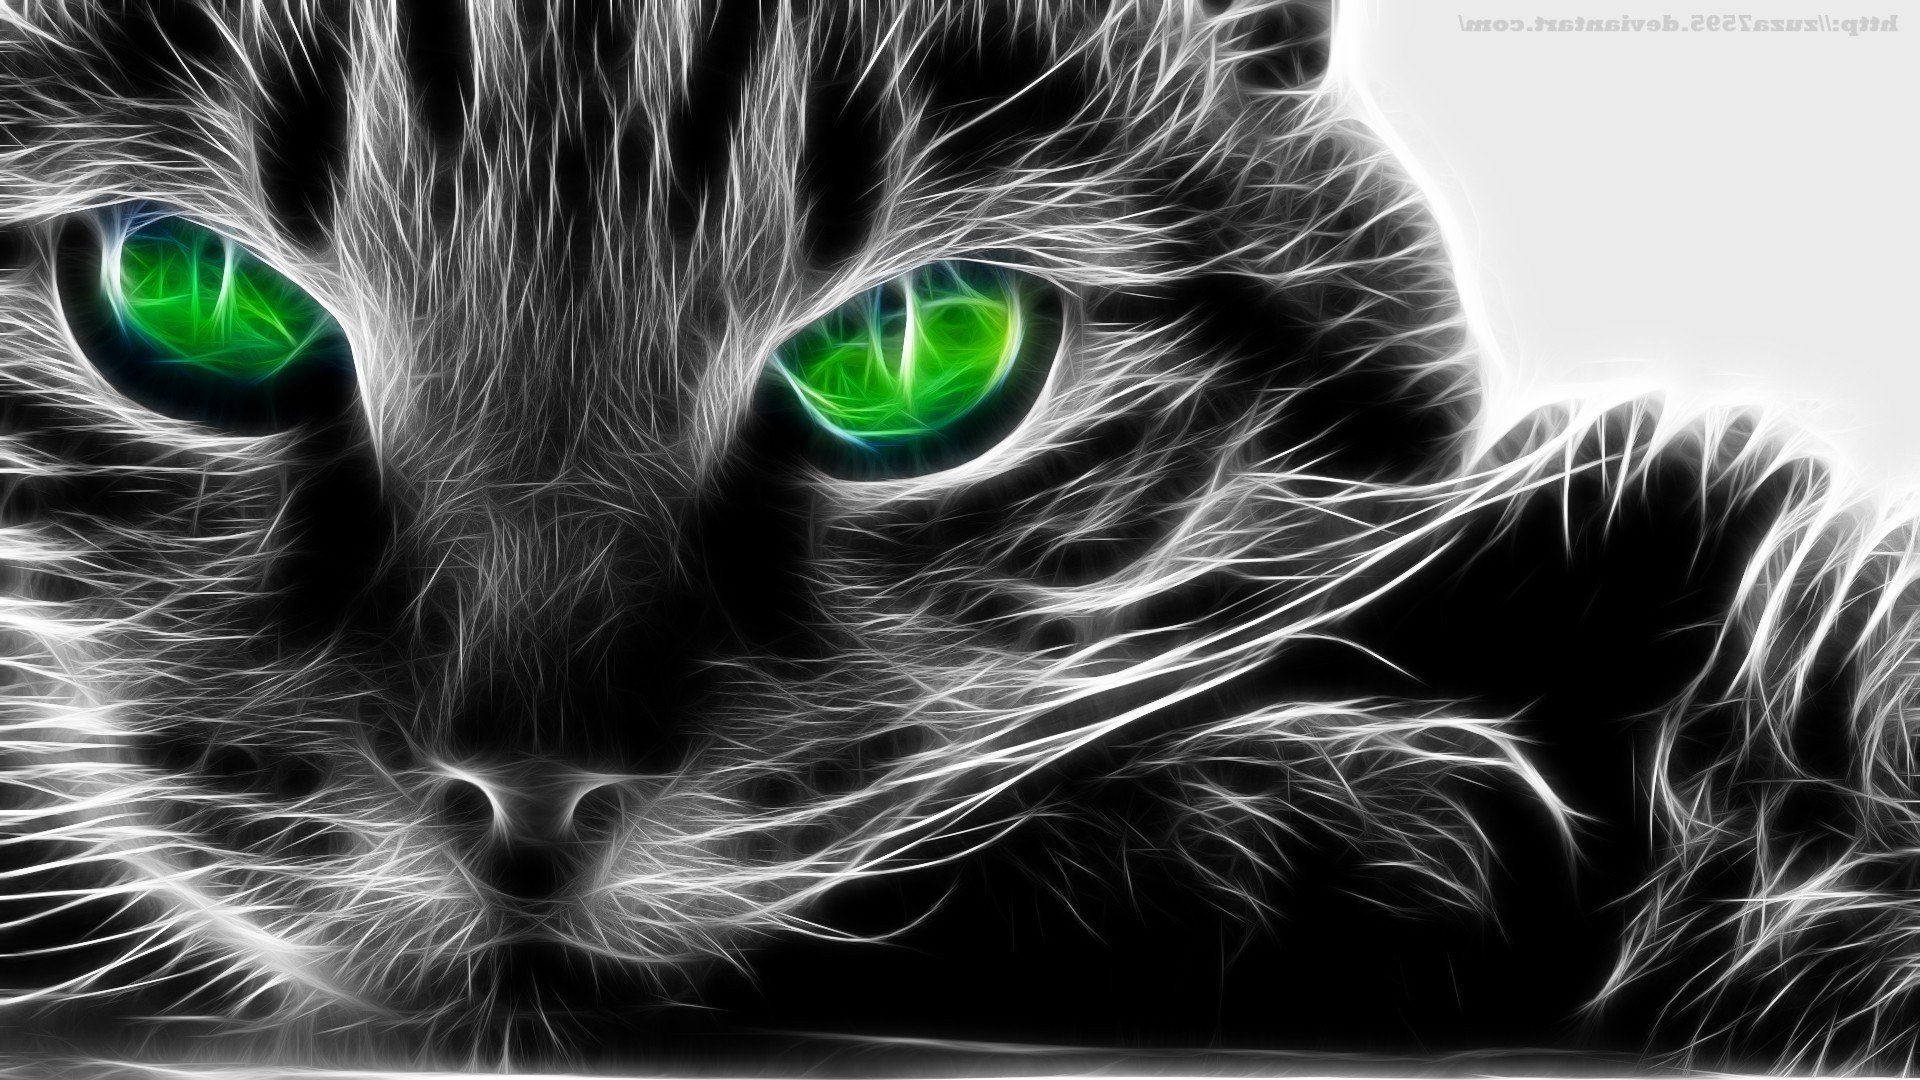 Картинка на страницу. Кошка арт. Аватар кот. Аватарка черный кот. Коты 3d.